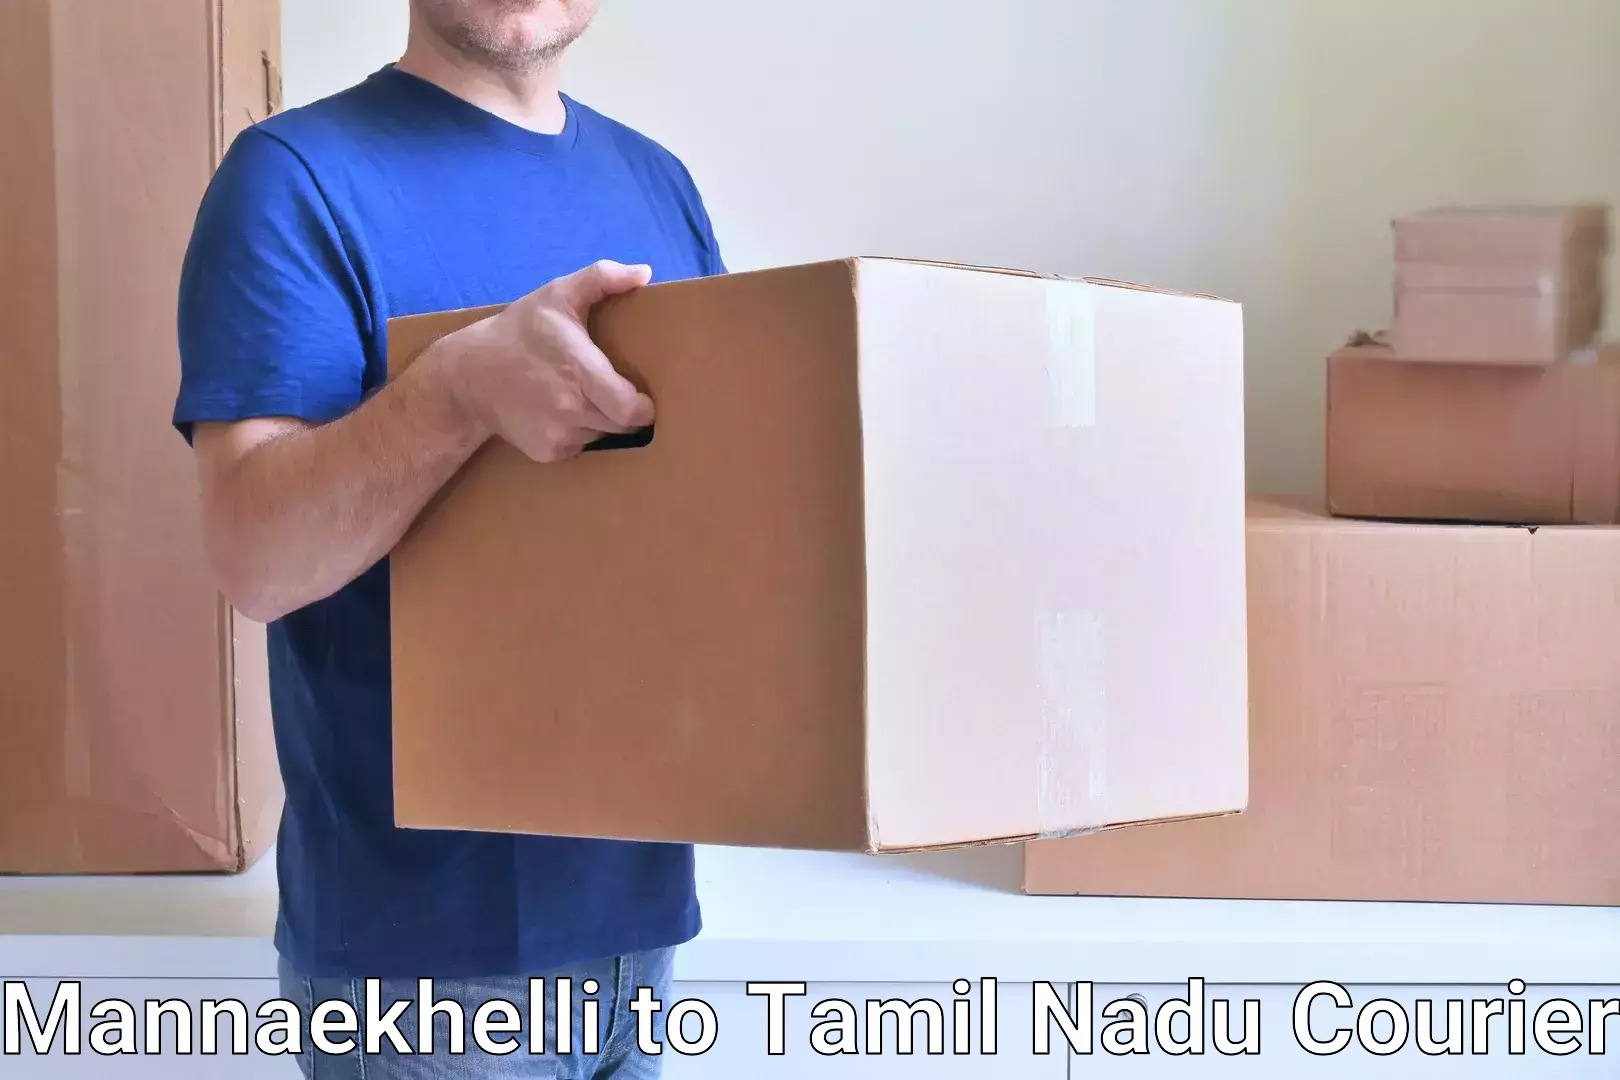 Express logistics Mannaekhelli to Sri Ramachandra Institute of Higher Education and Research Chennai